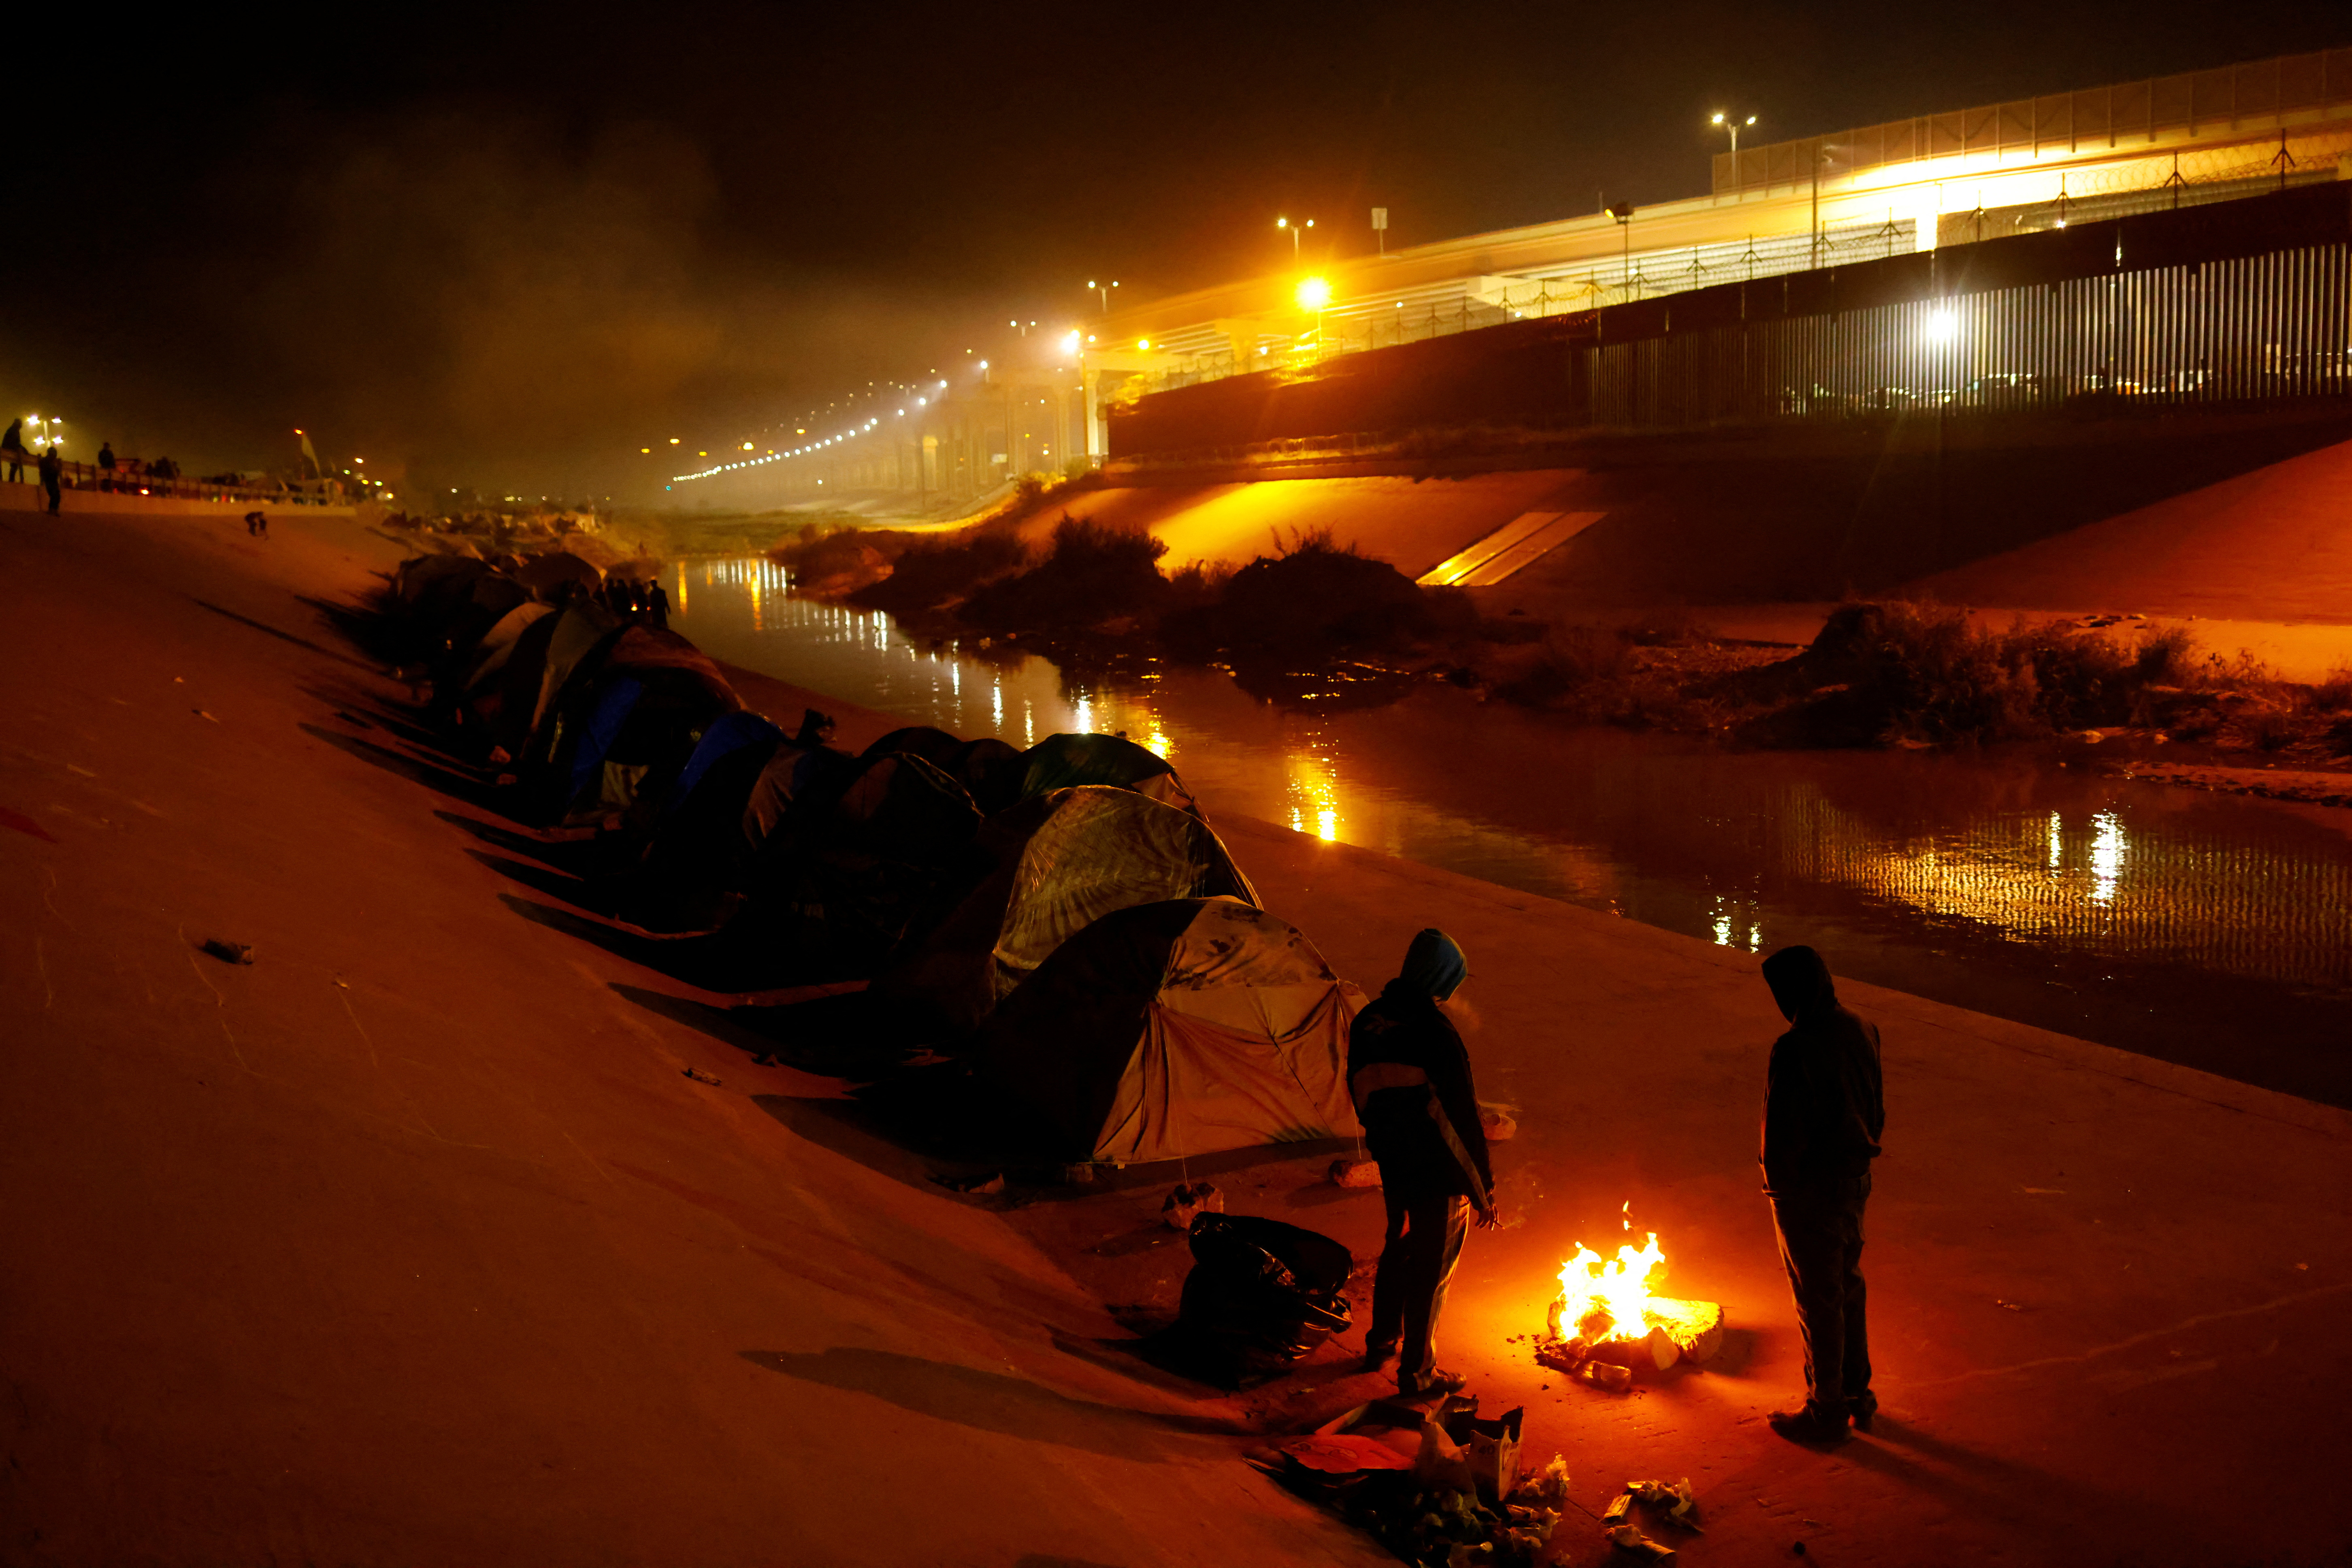 Venezuelan migrants at a camp on the banks of the Rio Bravo river in Ciudad Juarez